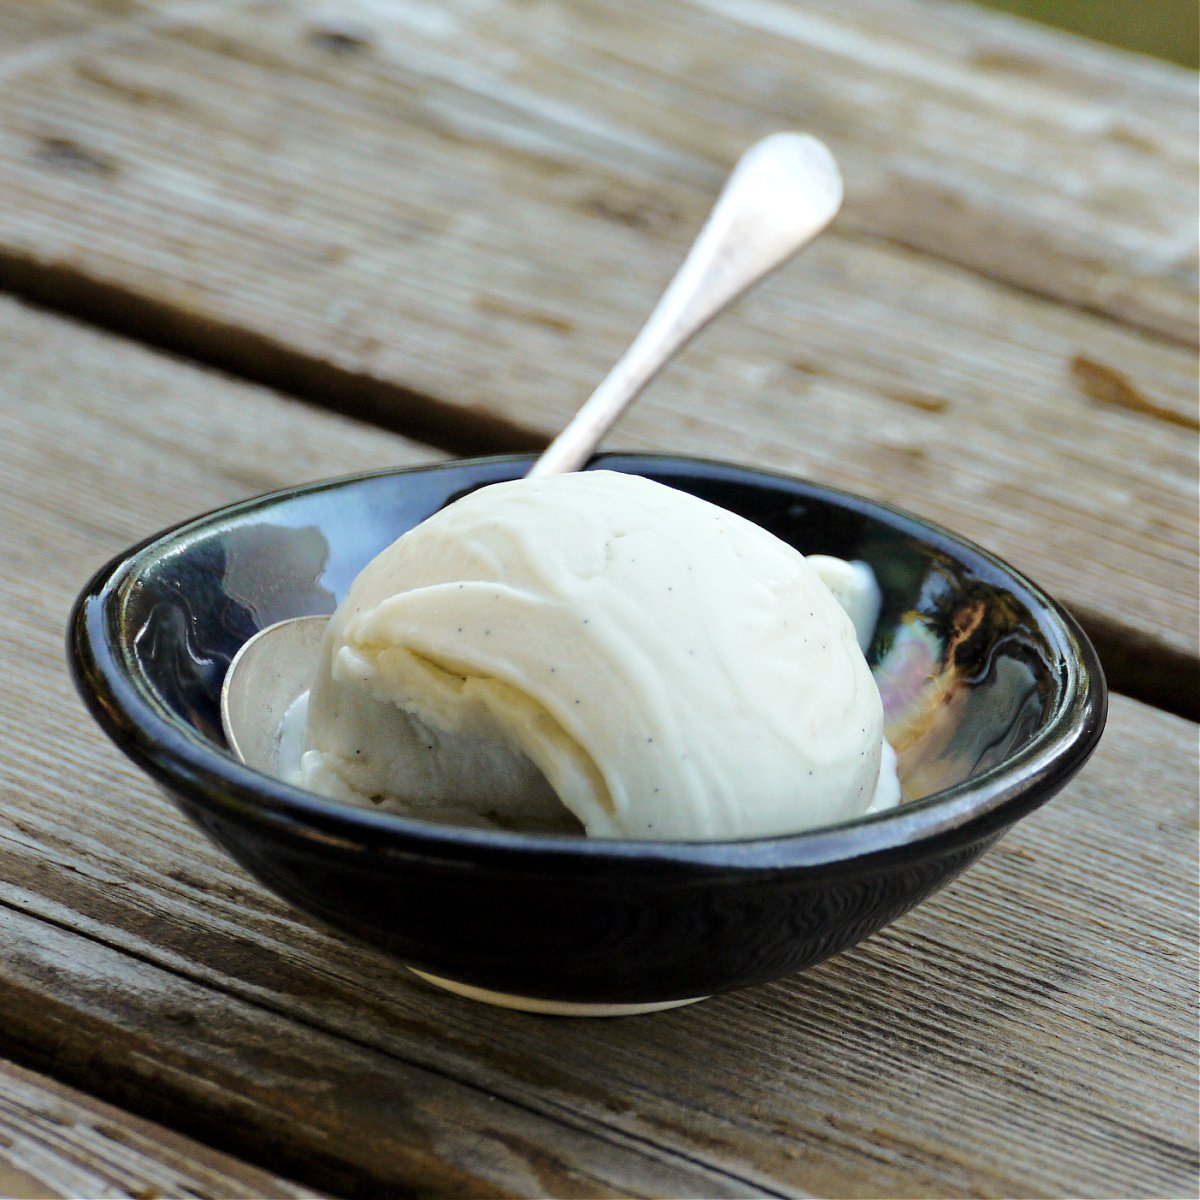 Single scoop of vanilla ice cream in a small ceramic serving bowl. 